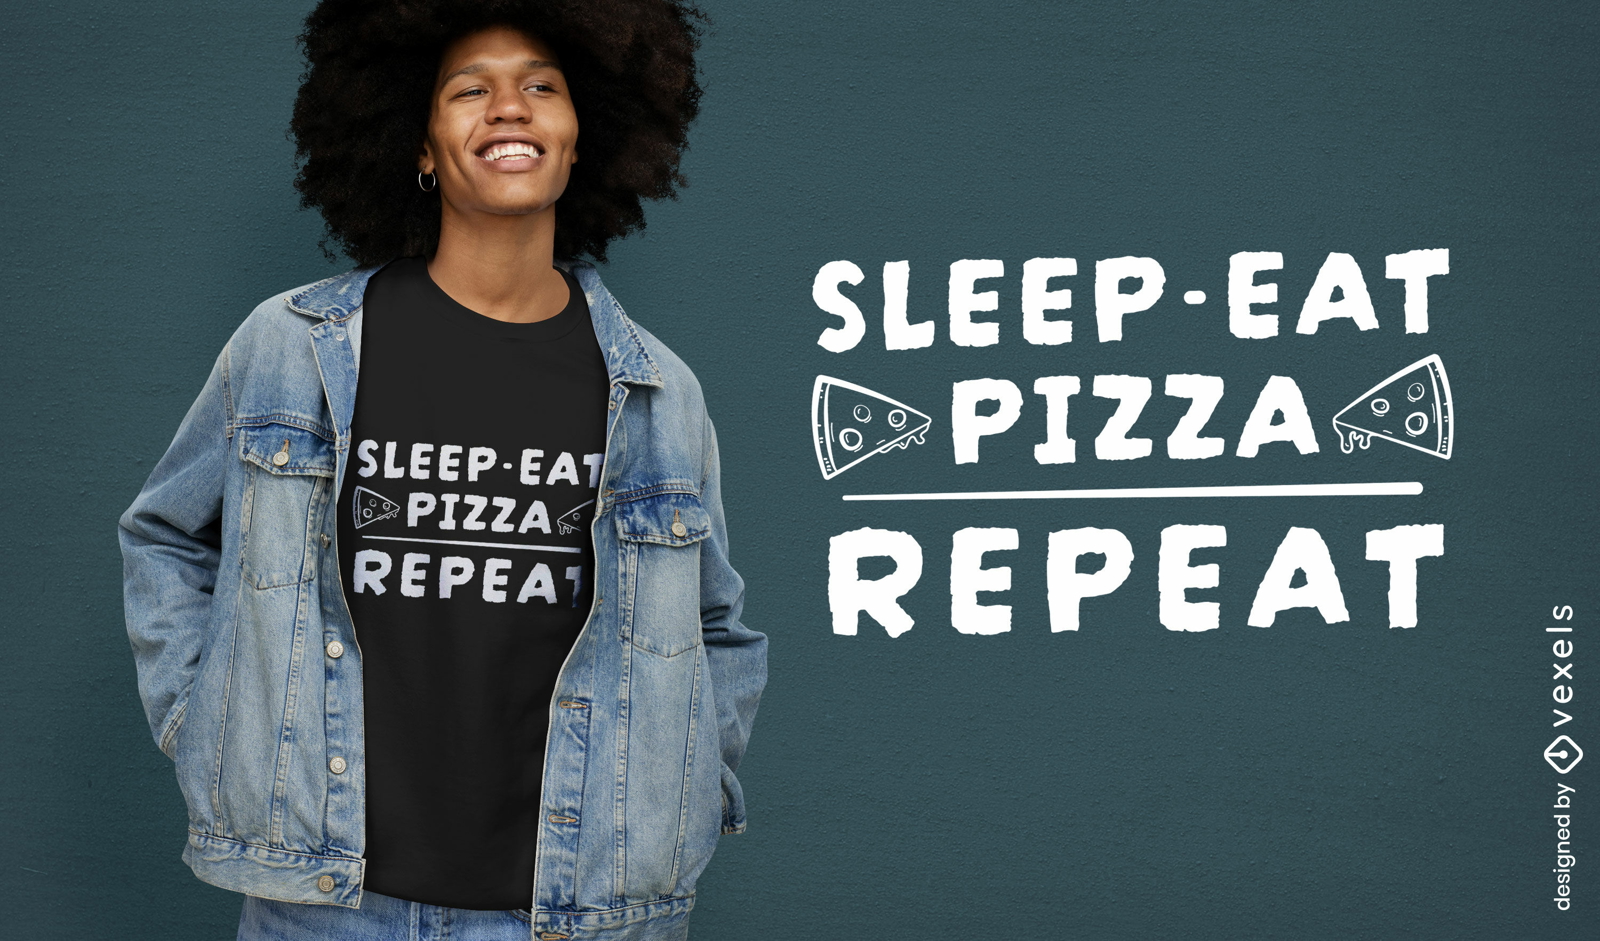 Dormir comer pizza repetir dise?o de camiseta